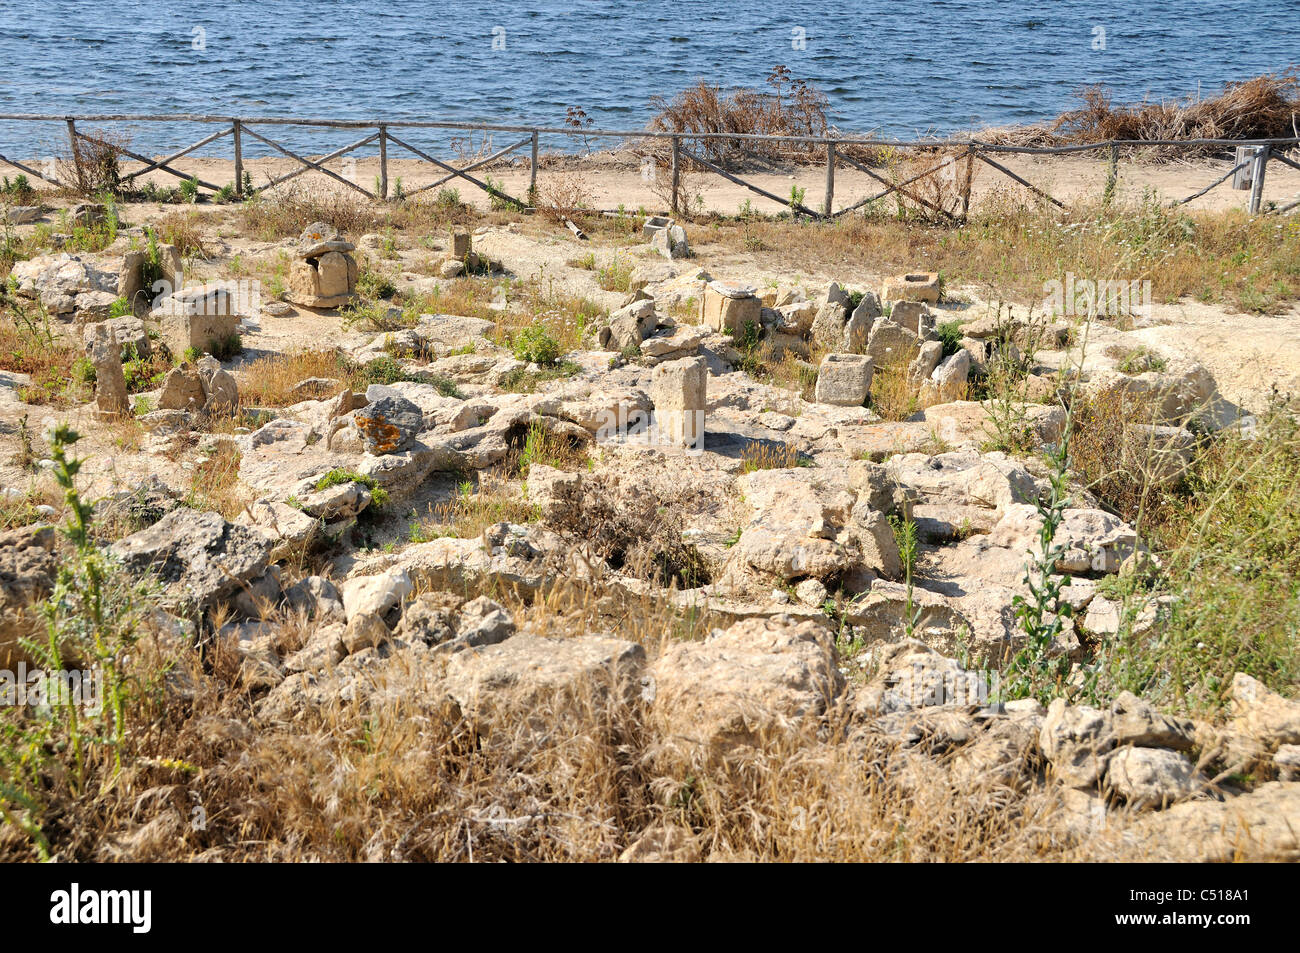 Nekropolis, sito storico, isola di Mozia, San Pantaleo, Marsala, Sicilia, Italia Foto Stock